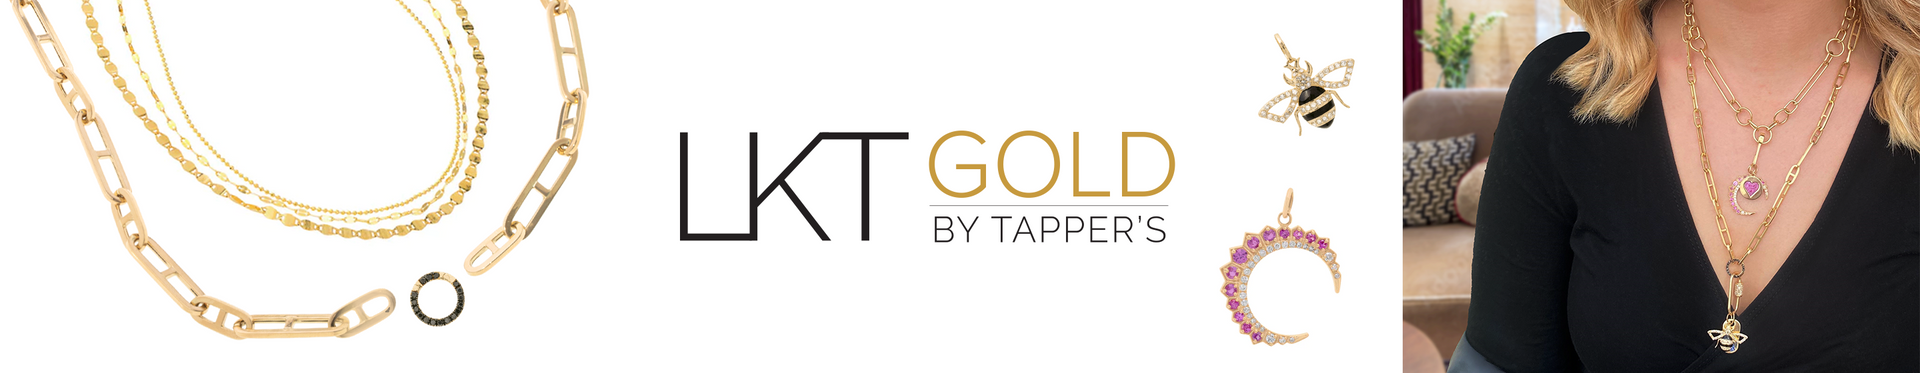 LKT Gold by Tapper's